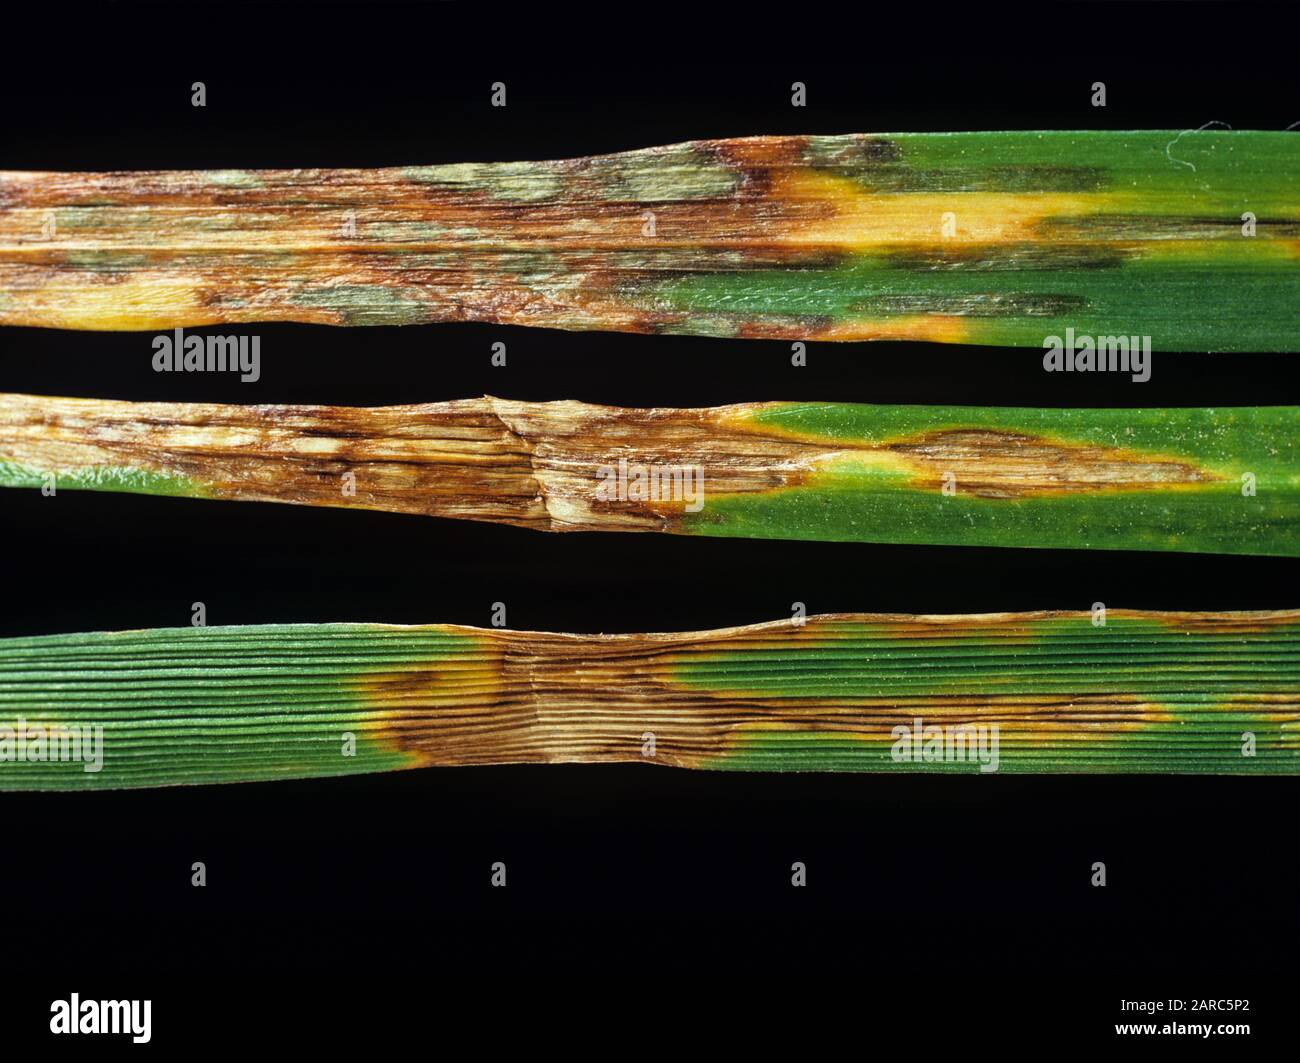 Leaf blotch (Rhynchosporium secalis) fungal disease lesions on ryegrass (Lolium perenne) leaves Stock Photo